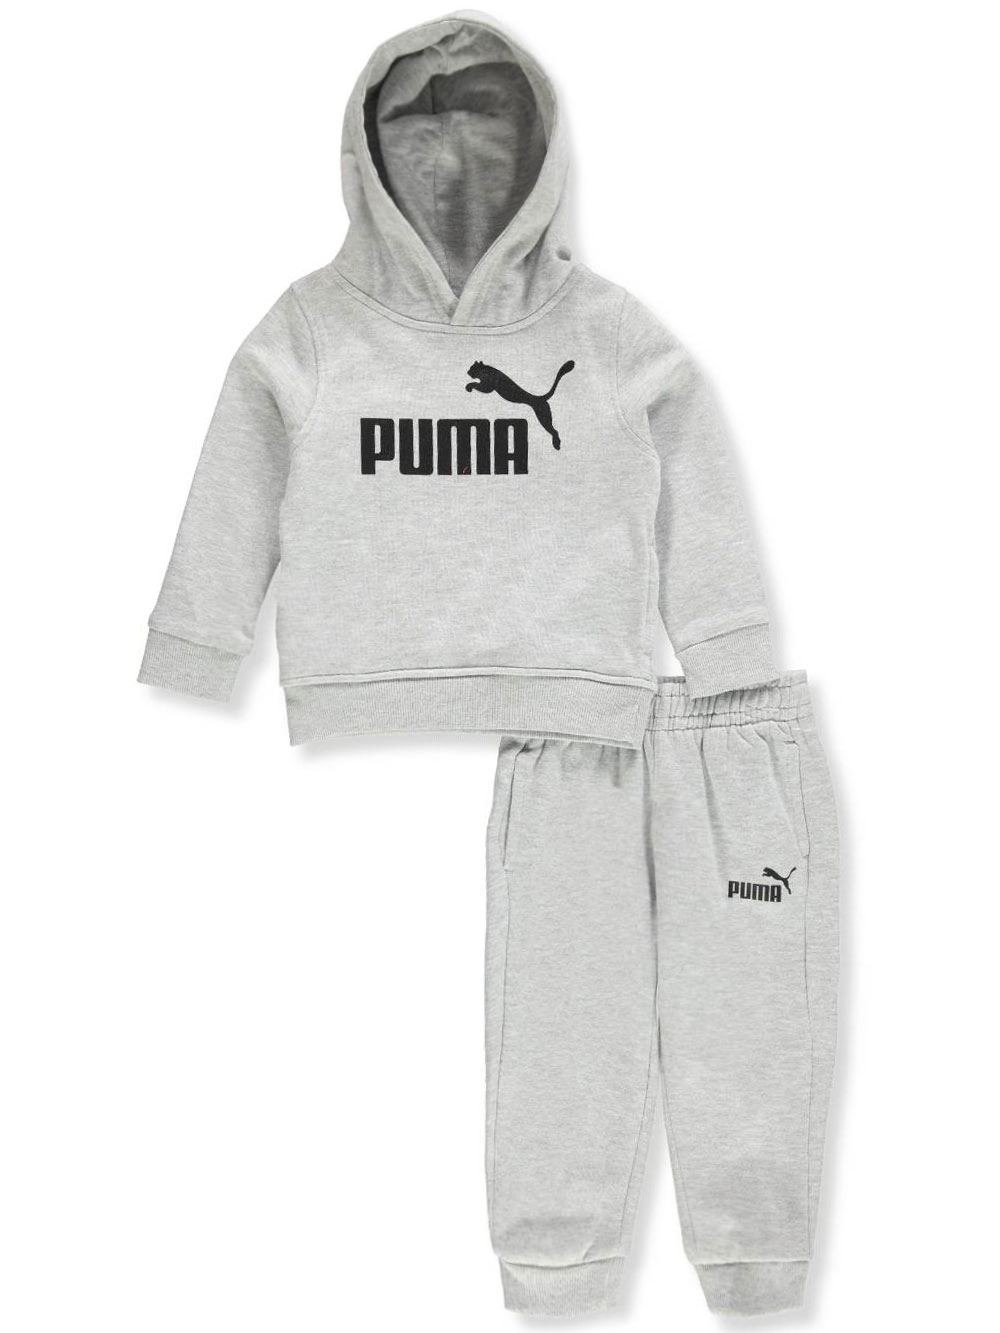 puma jogging outfits